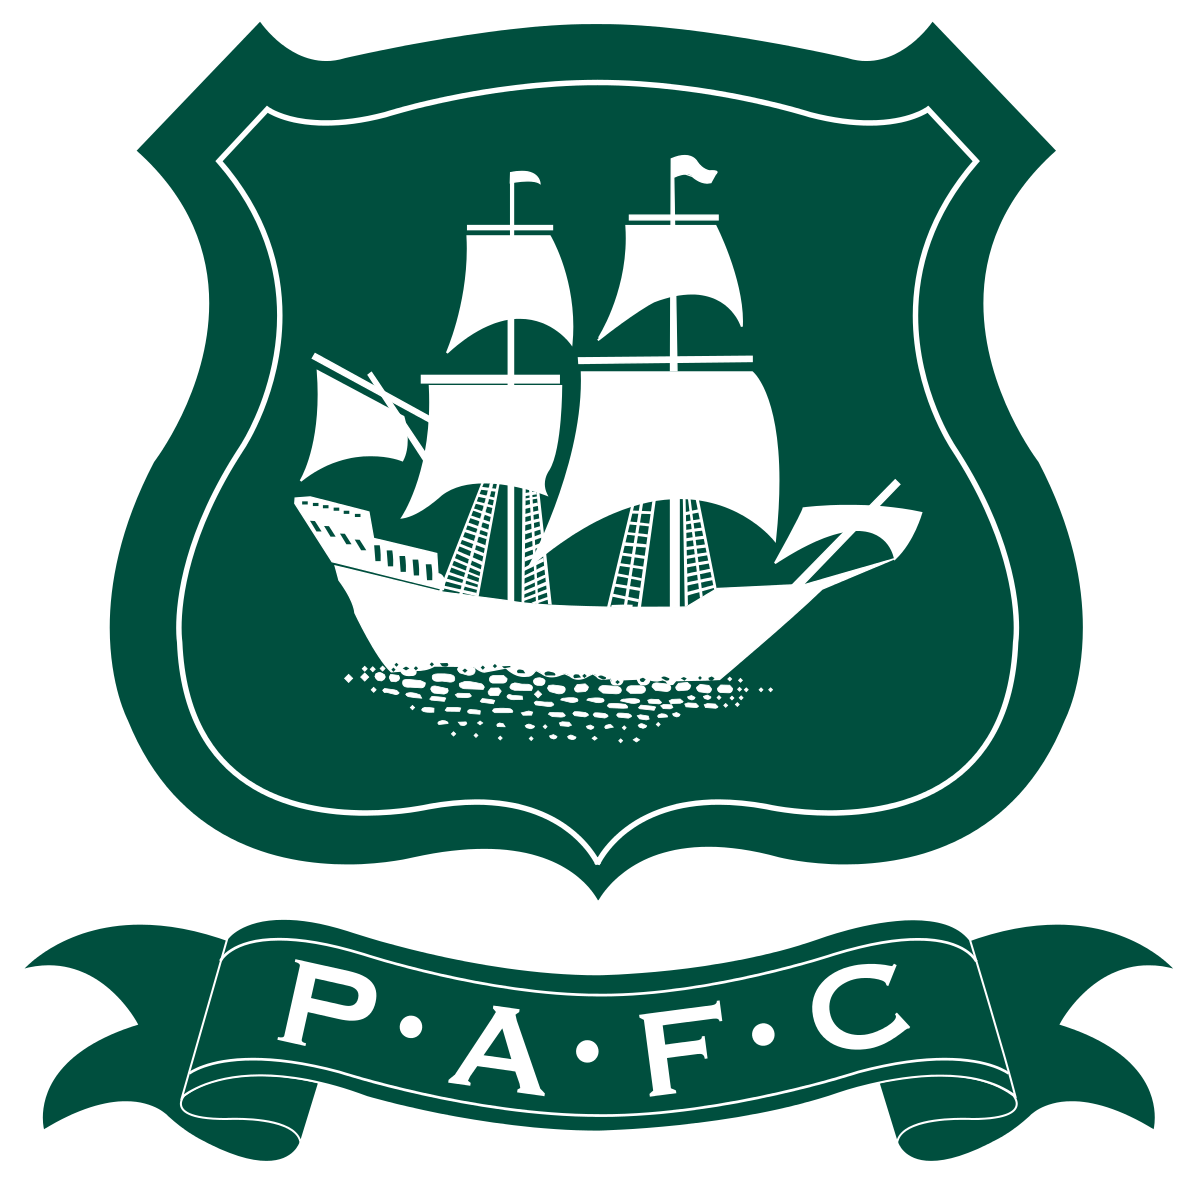 PAFC logo